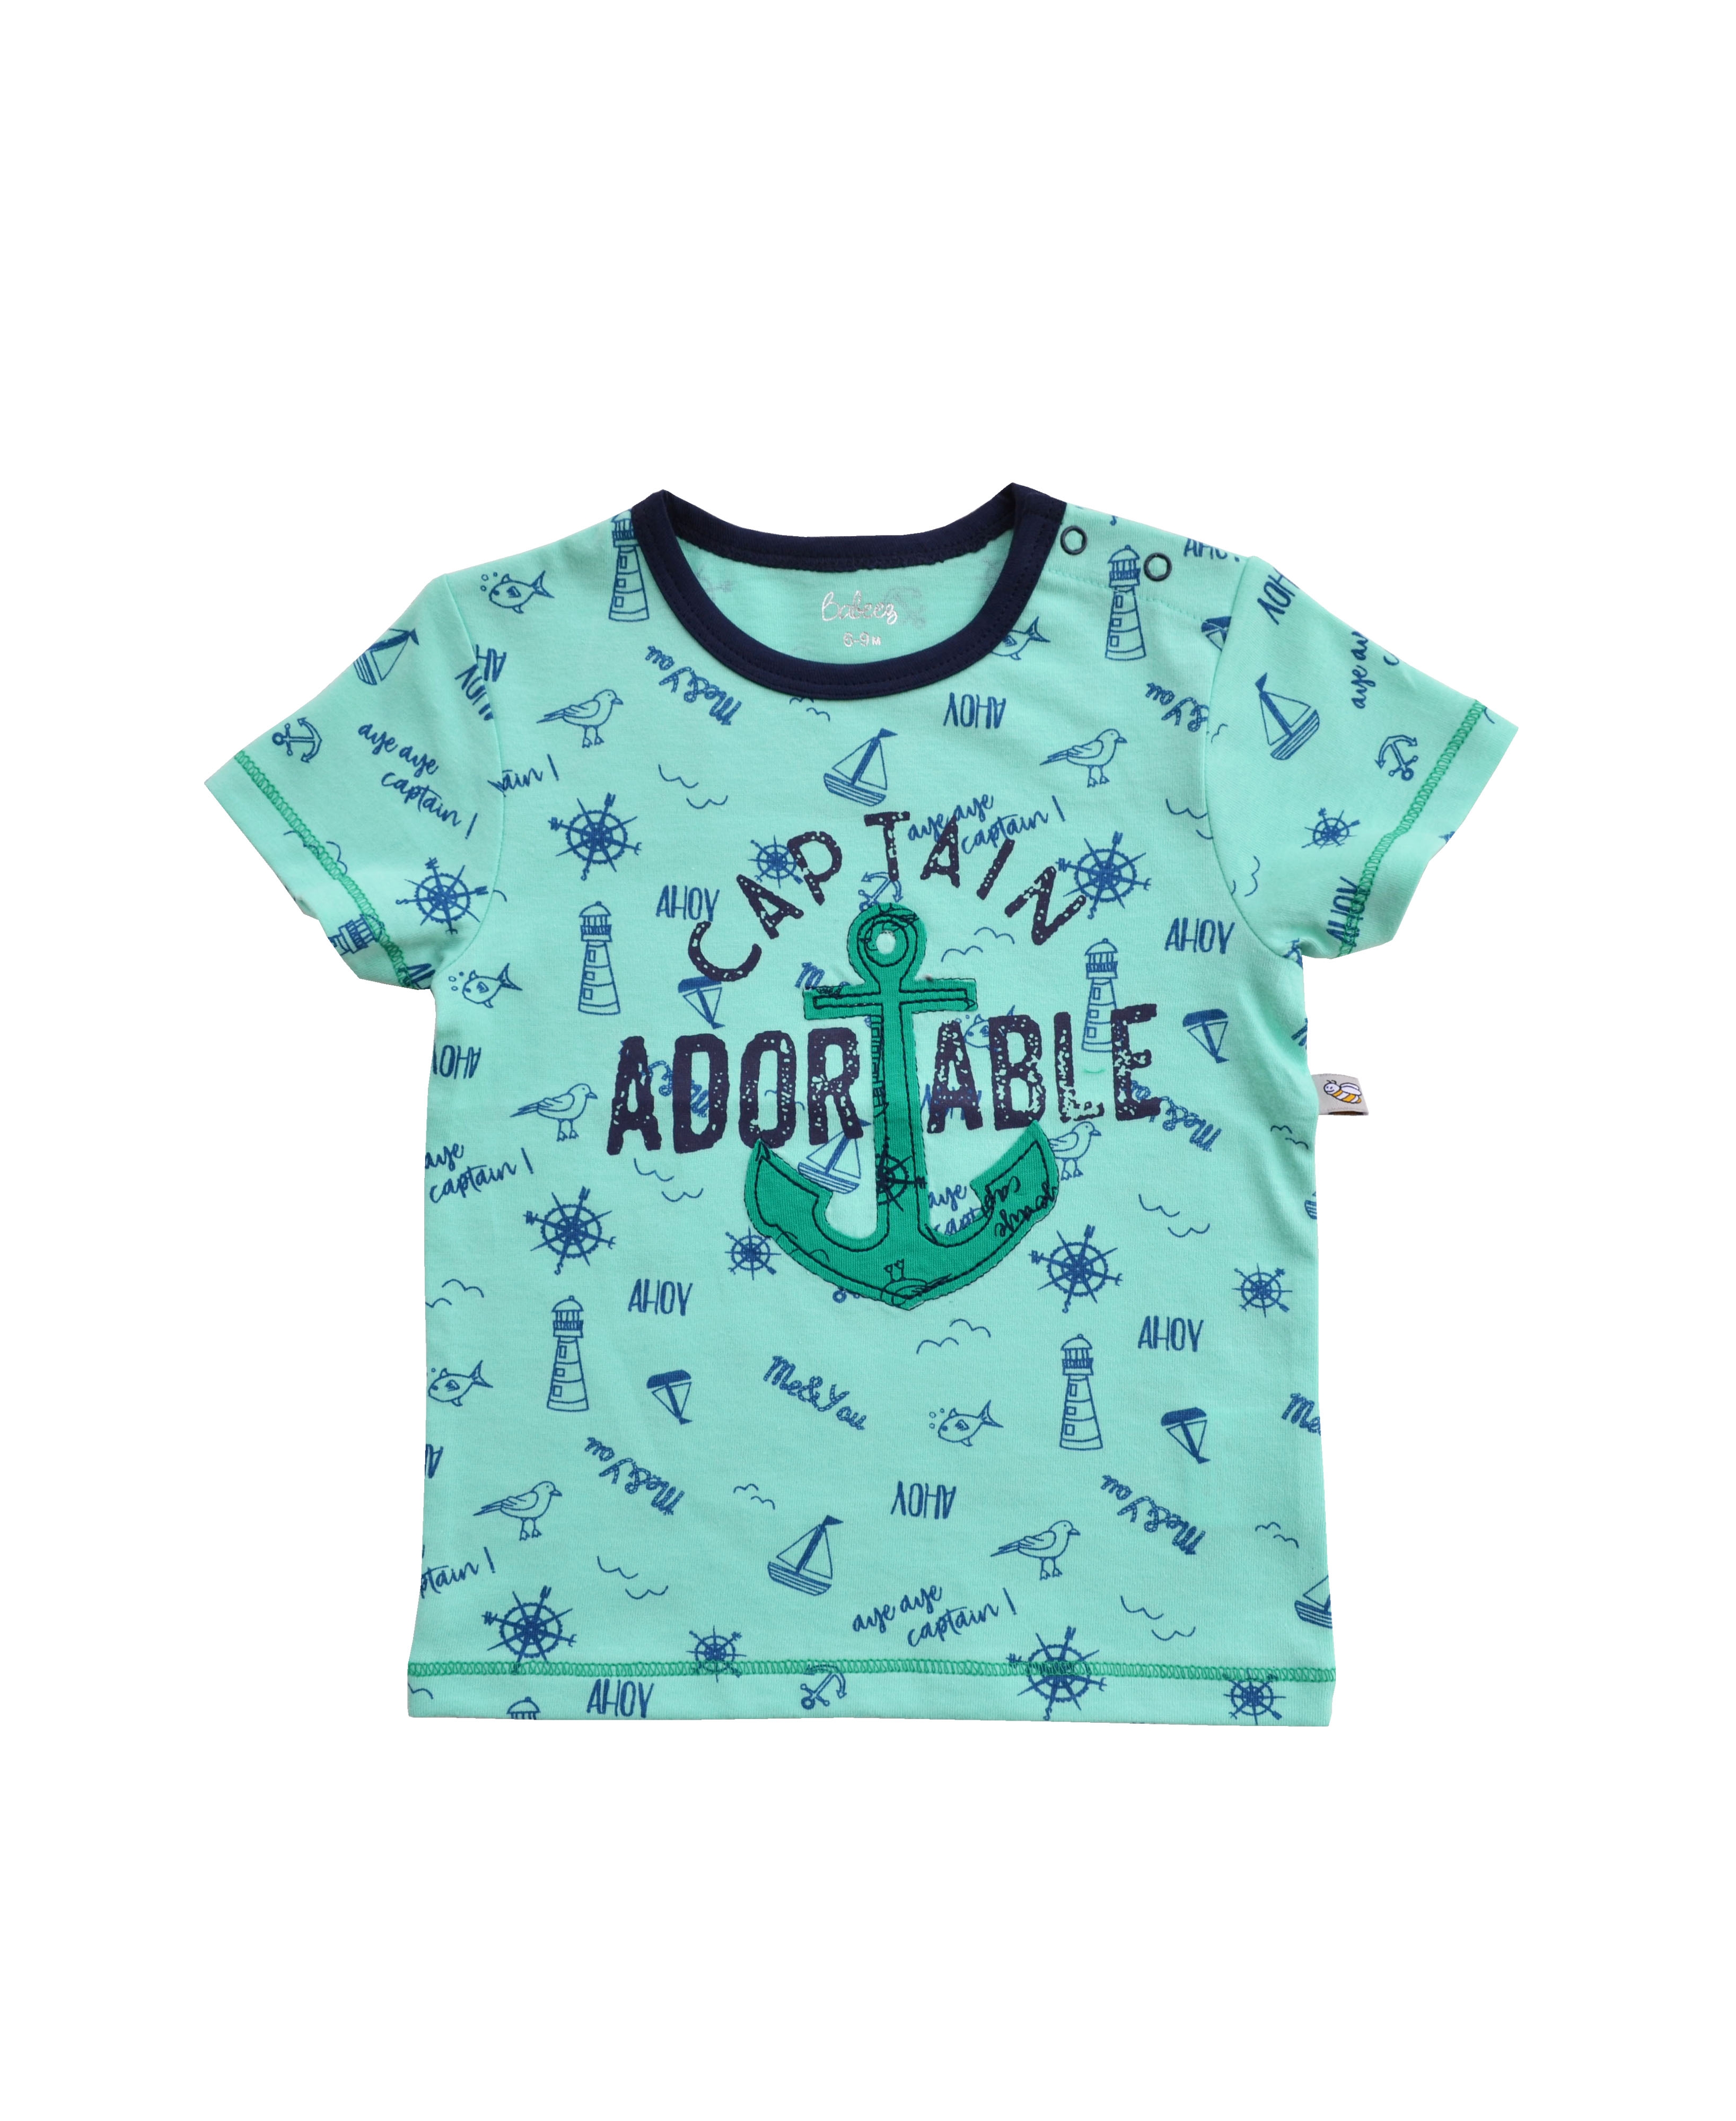 Babeez | Captain Adorable Print on Lt.Green T-Shirt (100% Cotton Single Jersey) undefined